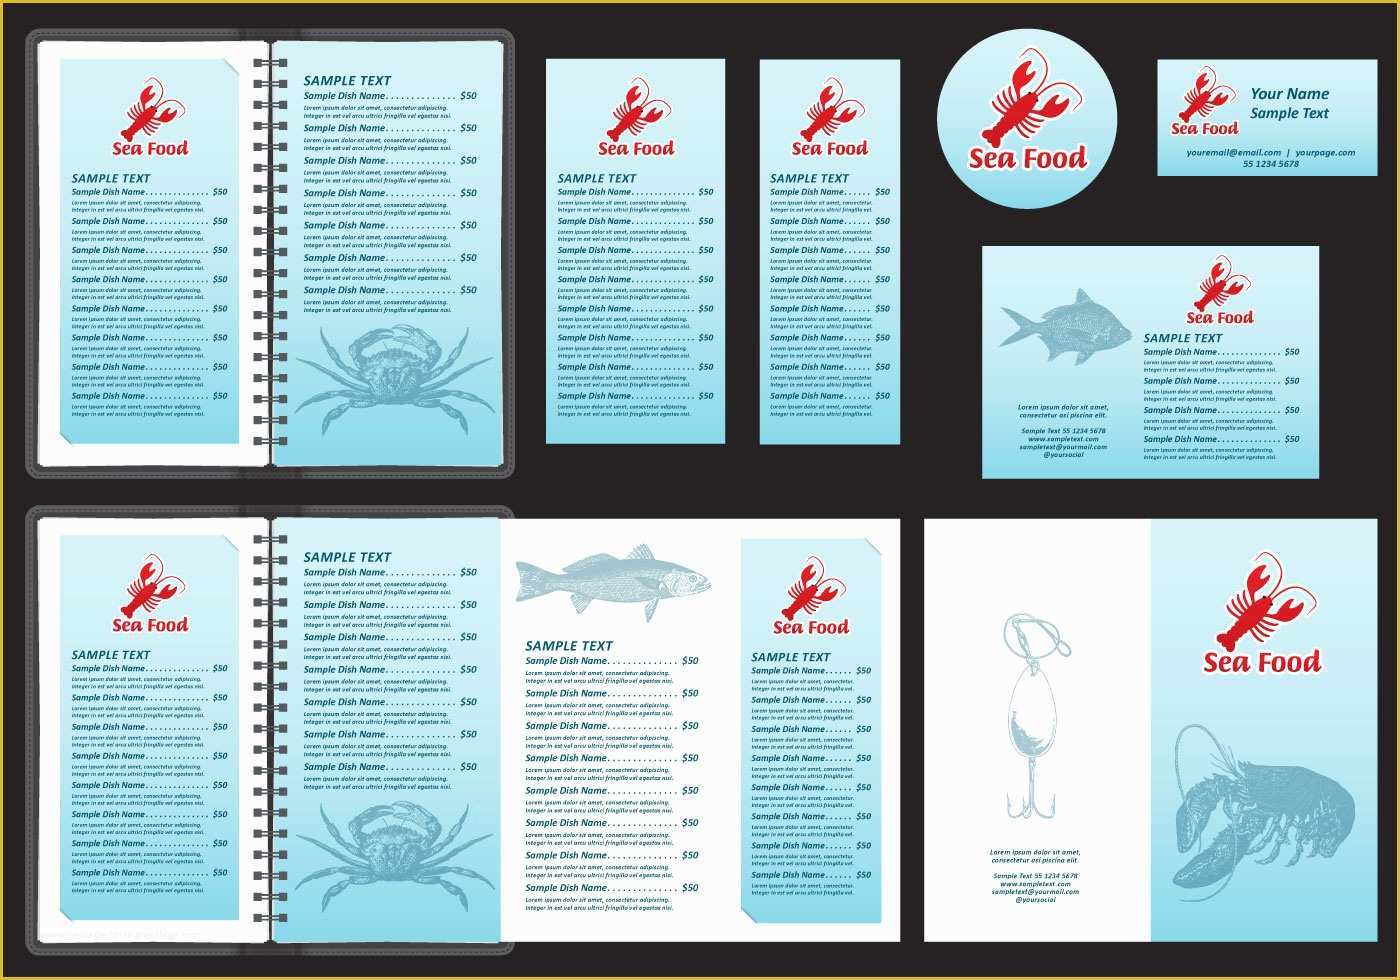 Free Menu Design Templates Of Seafood Menu Templates Download Free Vector Art Stock